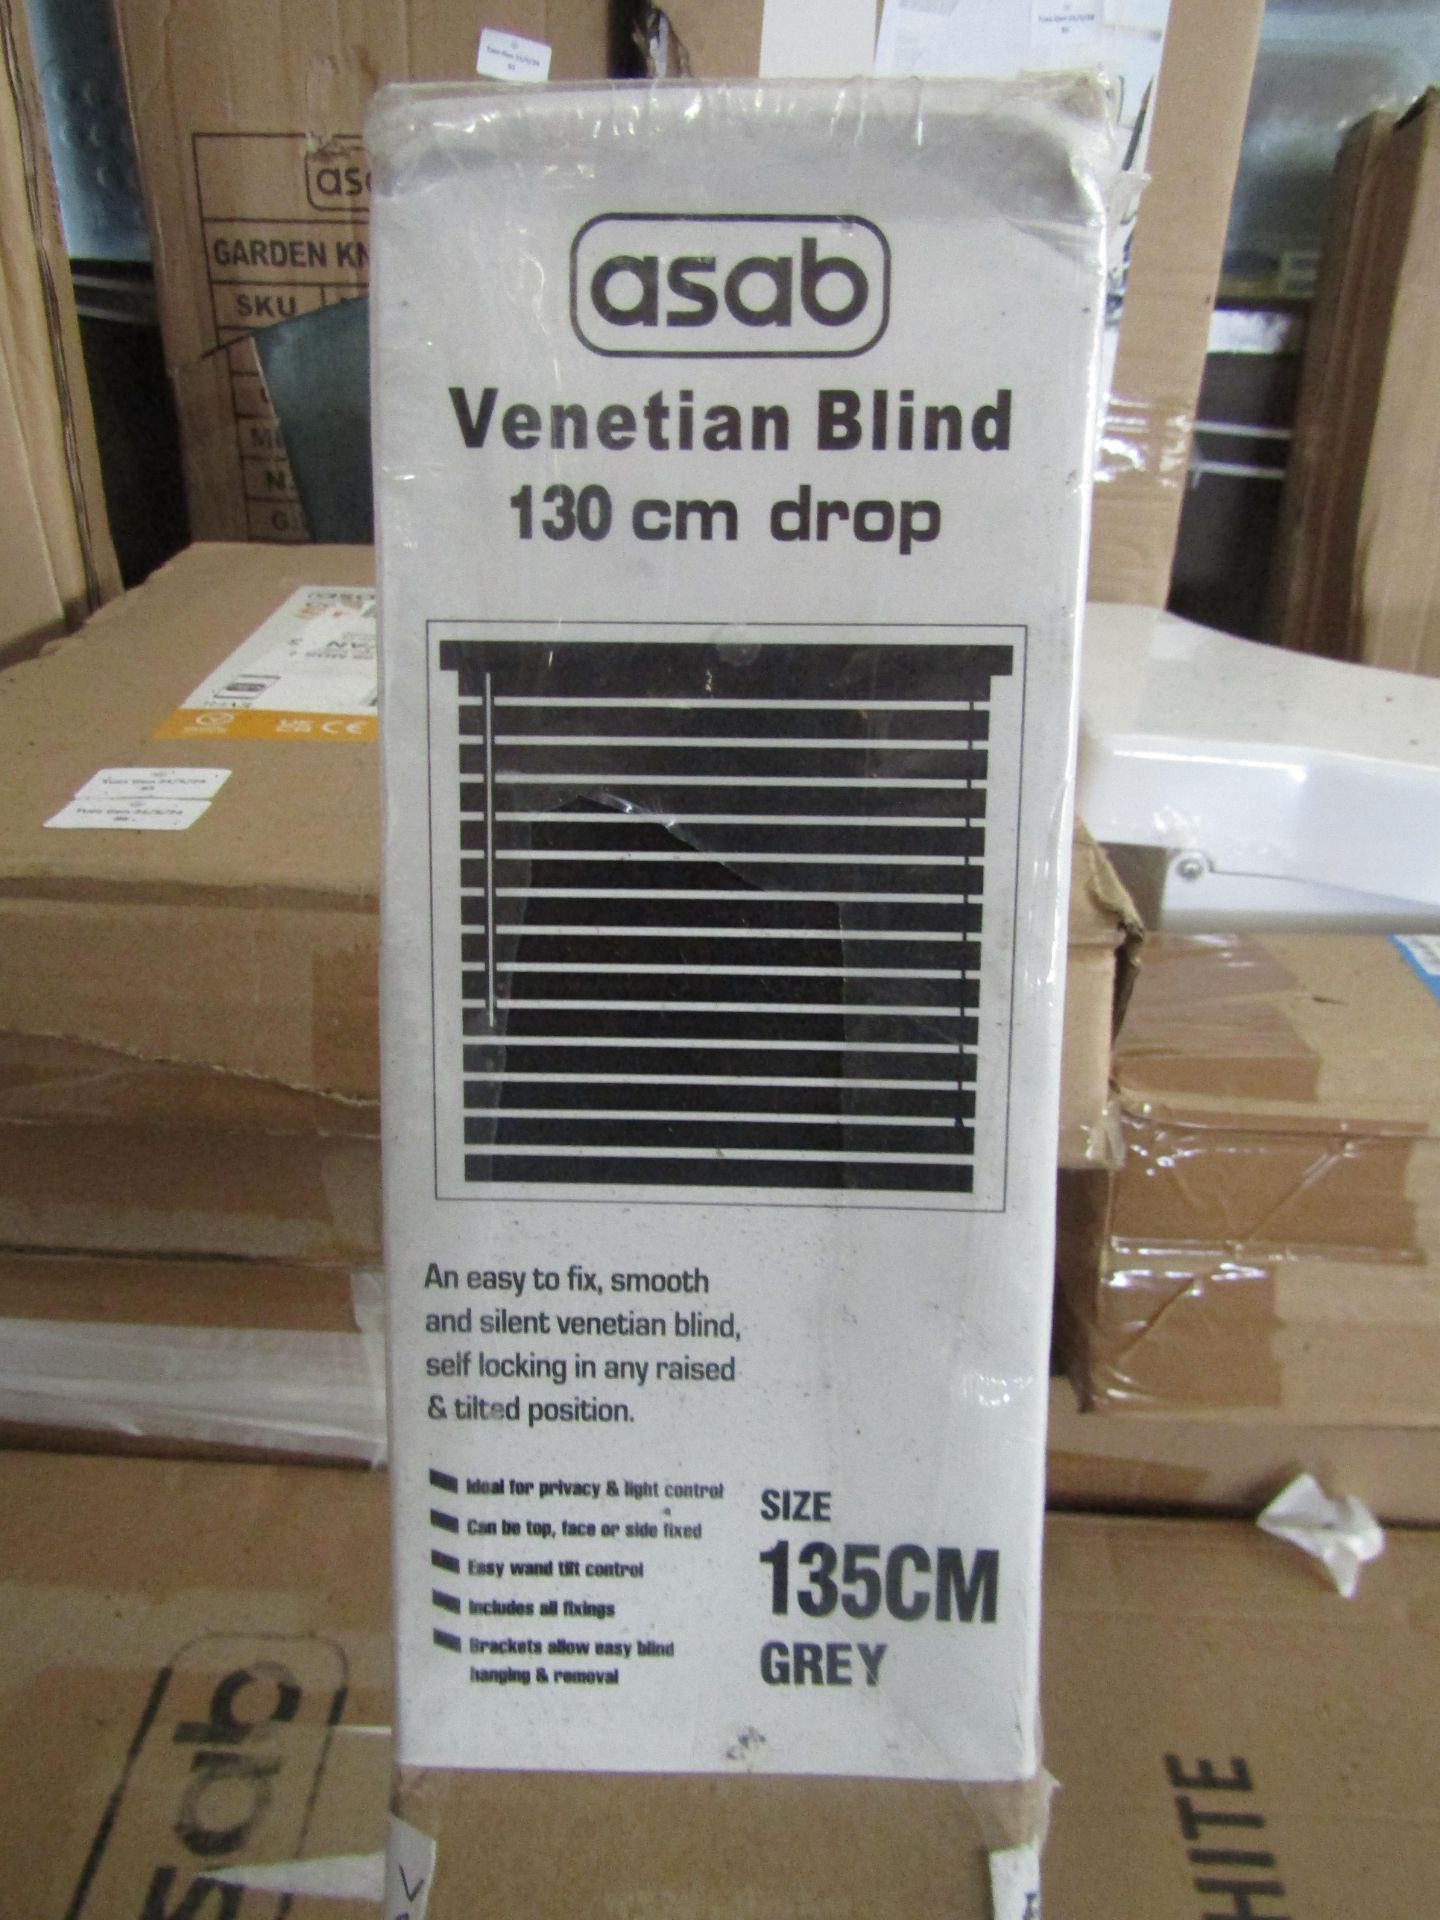 Asab Venetian Blind 130cm Drop, Size 135cm, Grey, Unchecked & Boxed.